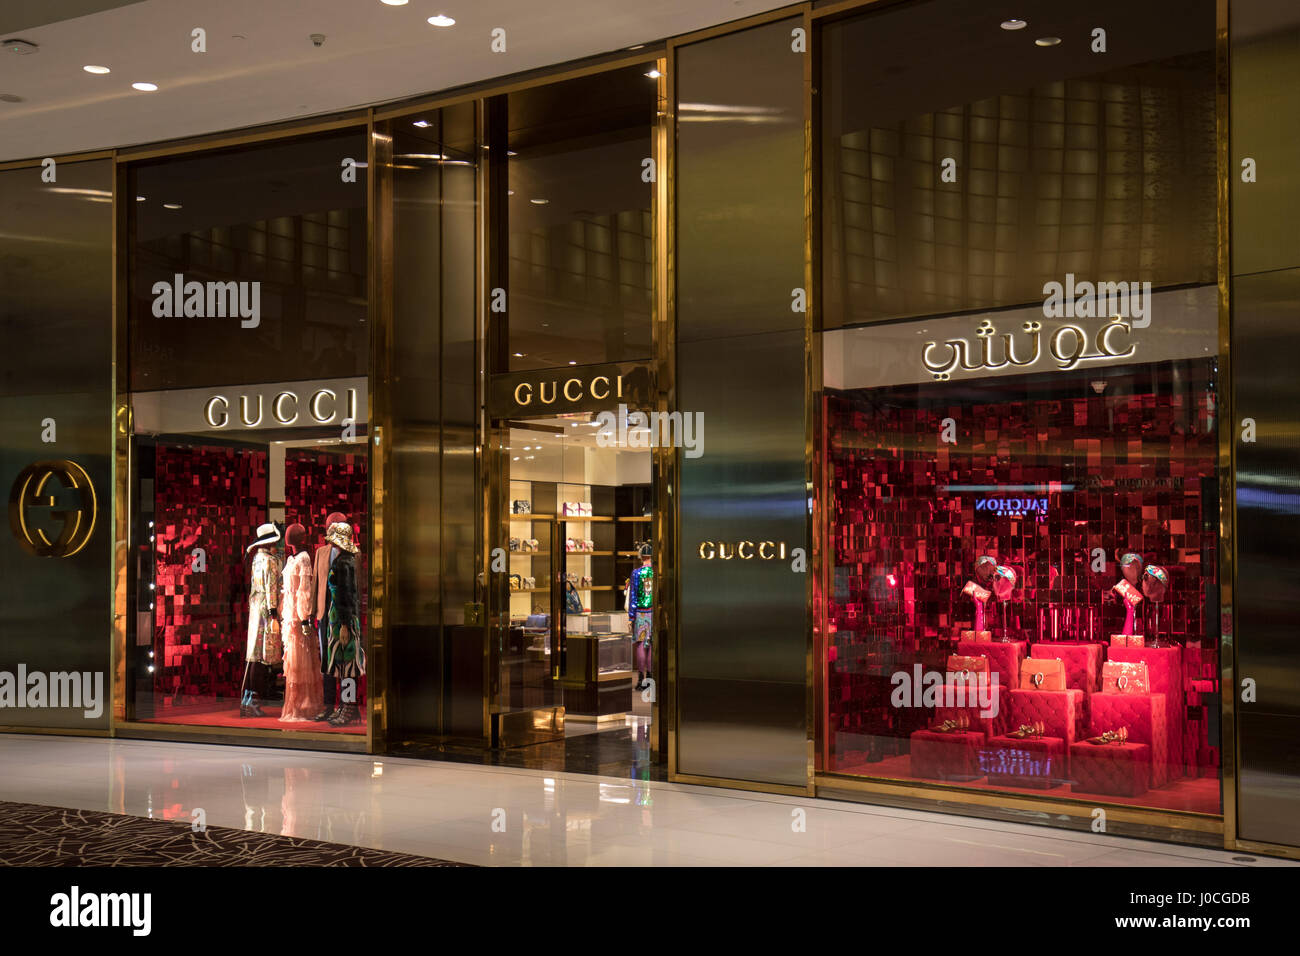 The Gucci shop Fashion Avenue of the Dubai Stock Photo - Alamy